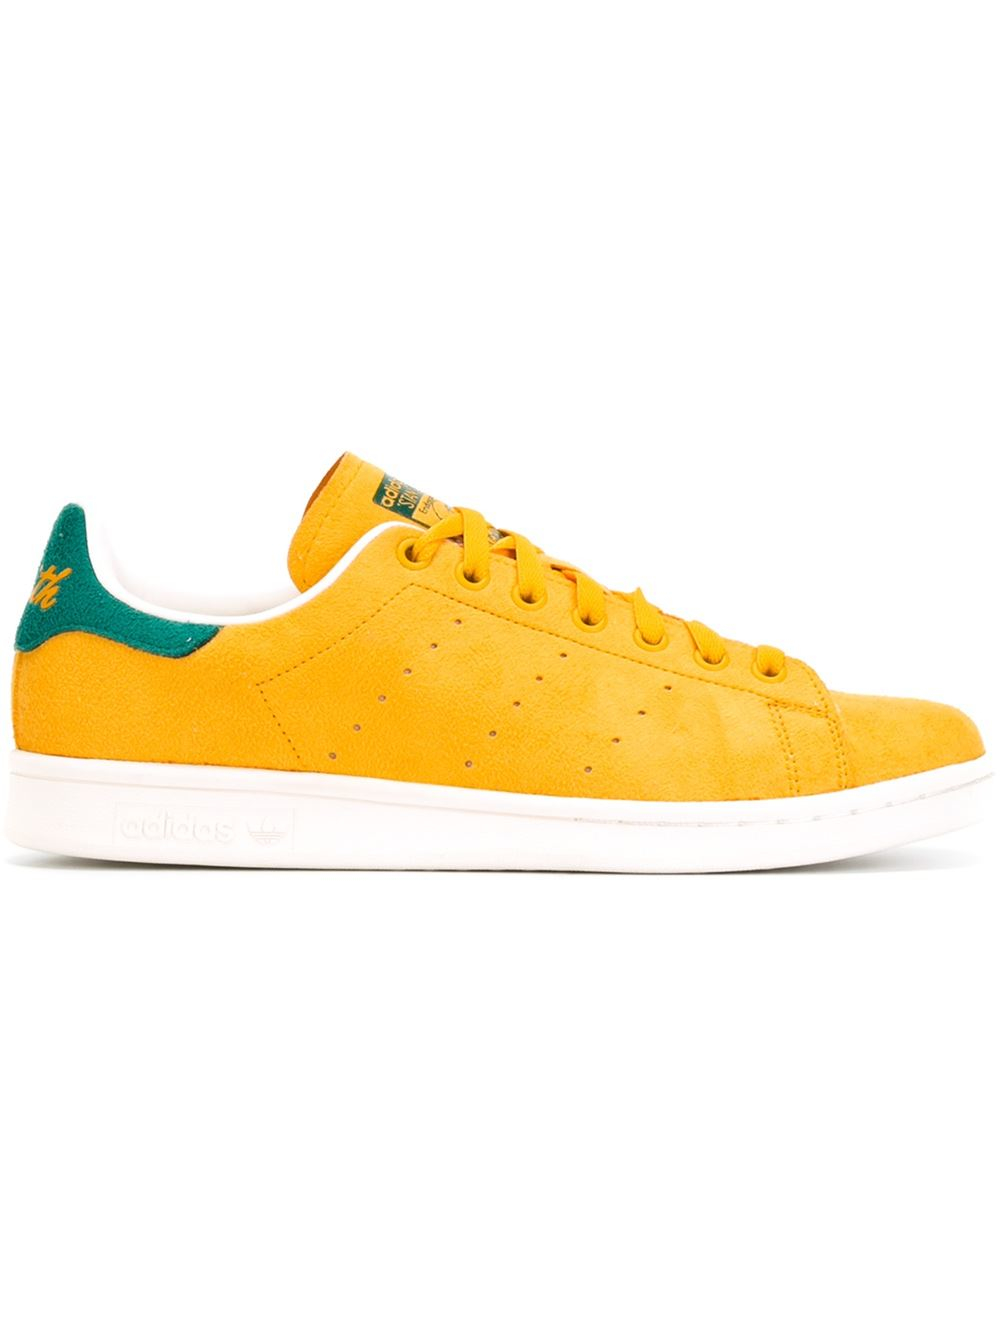 adidas Originals 'stan Smith' Sneakers in Yellow & Orange (Yellow) for Men  - Lyst